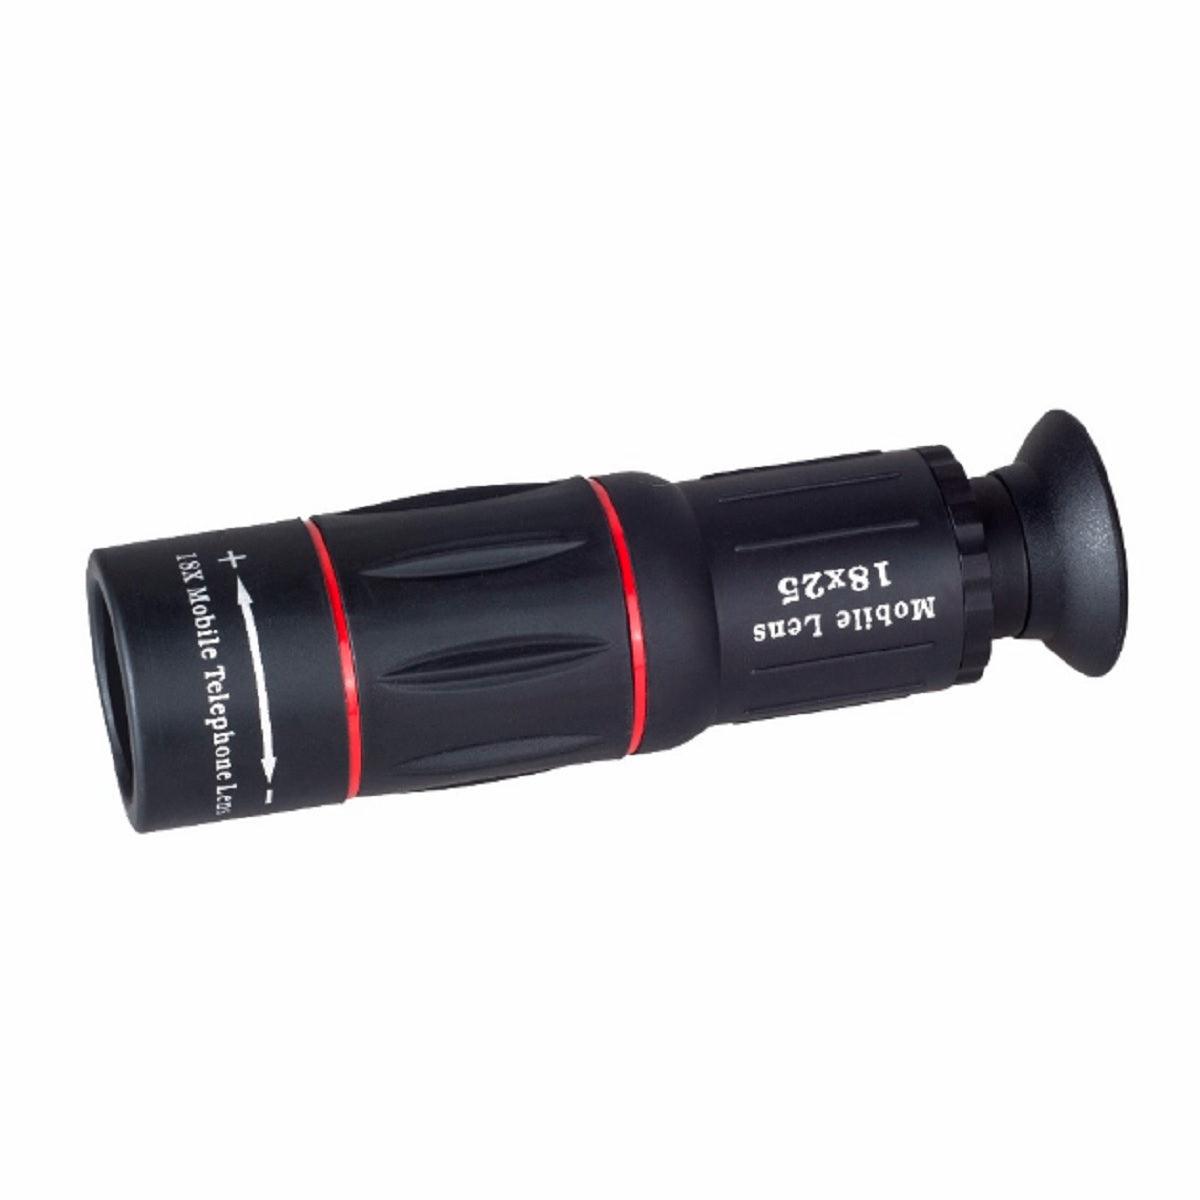 Apexel 18x Telescopic Zoom Lens - Monocular, For Mobile Phone - dealskart.com.au